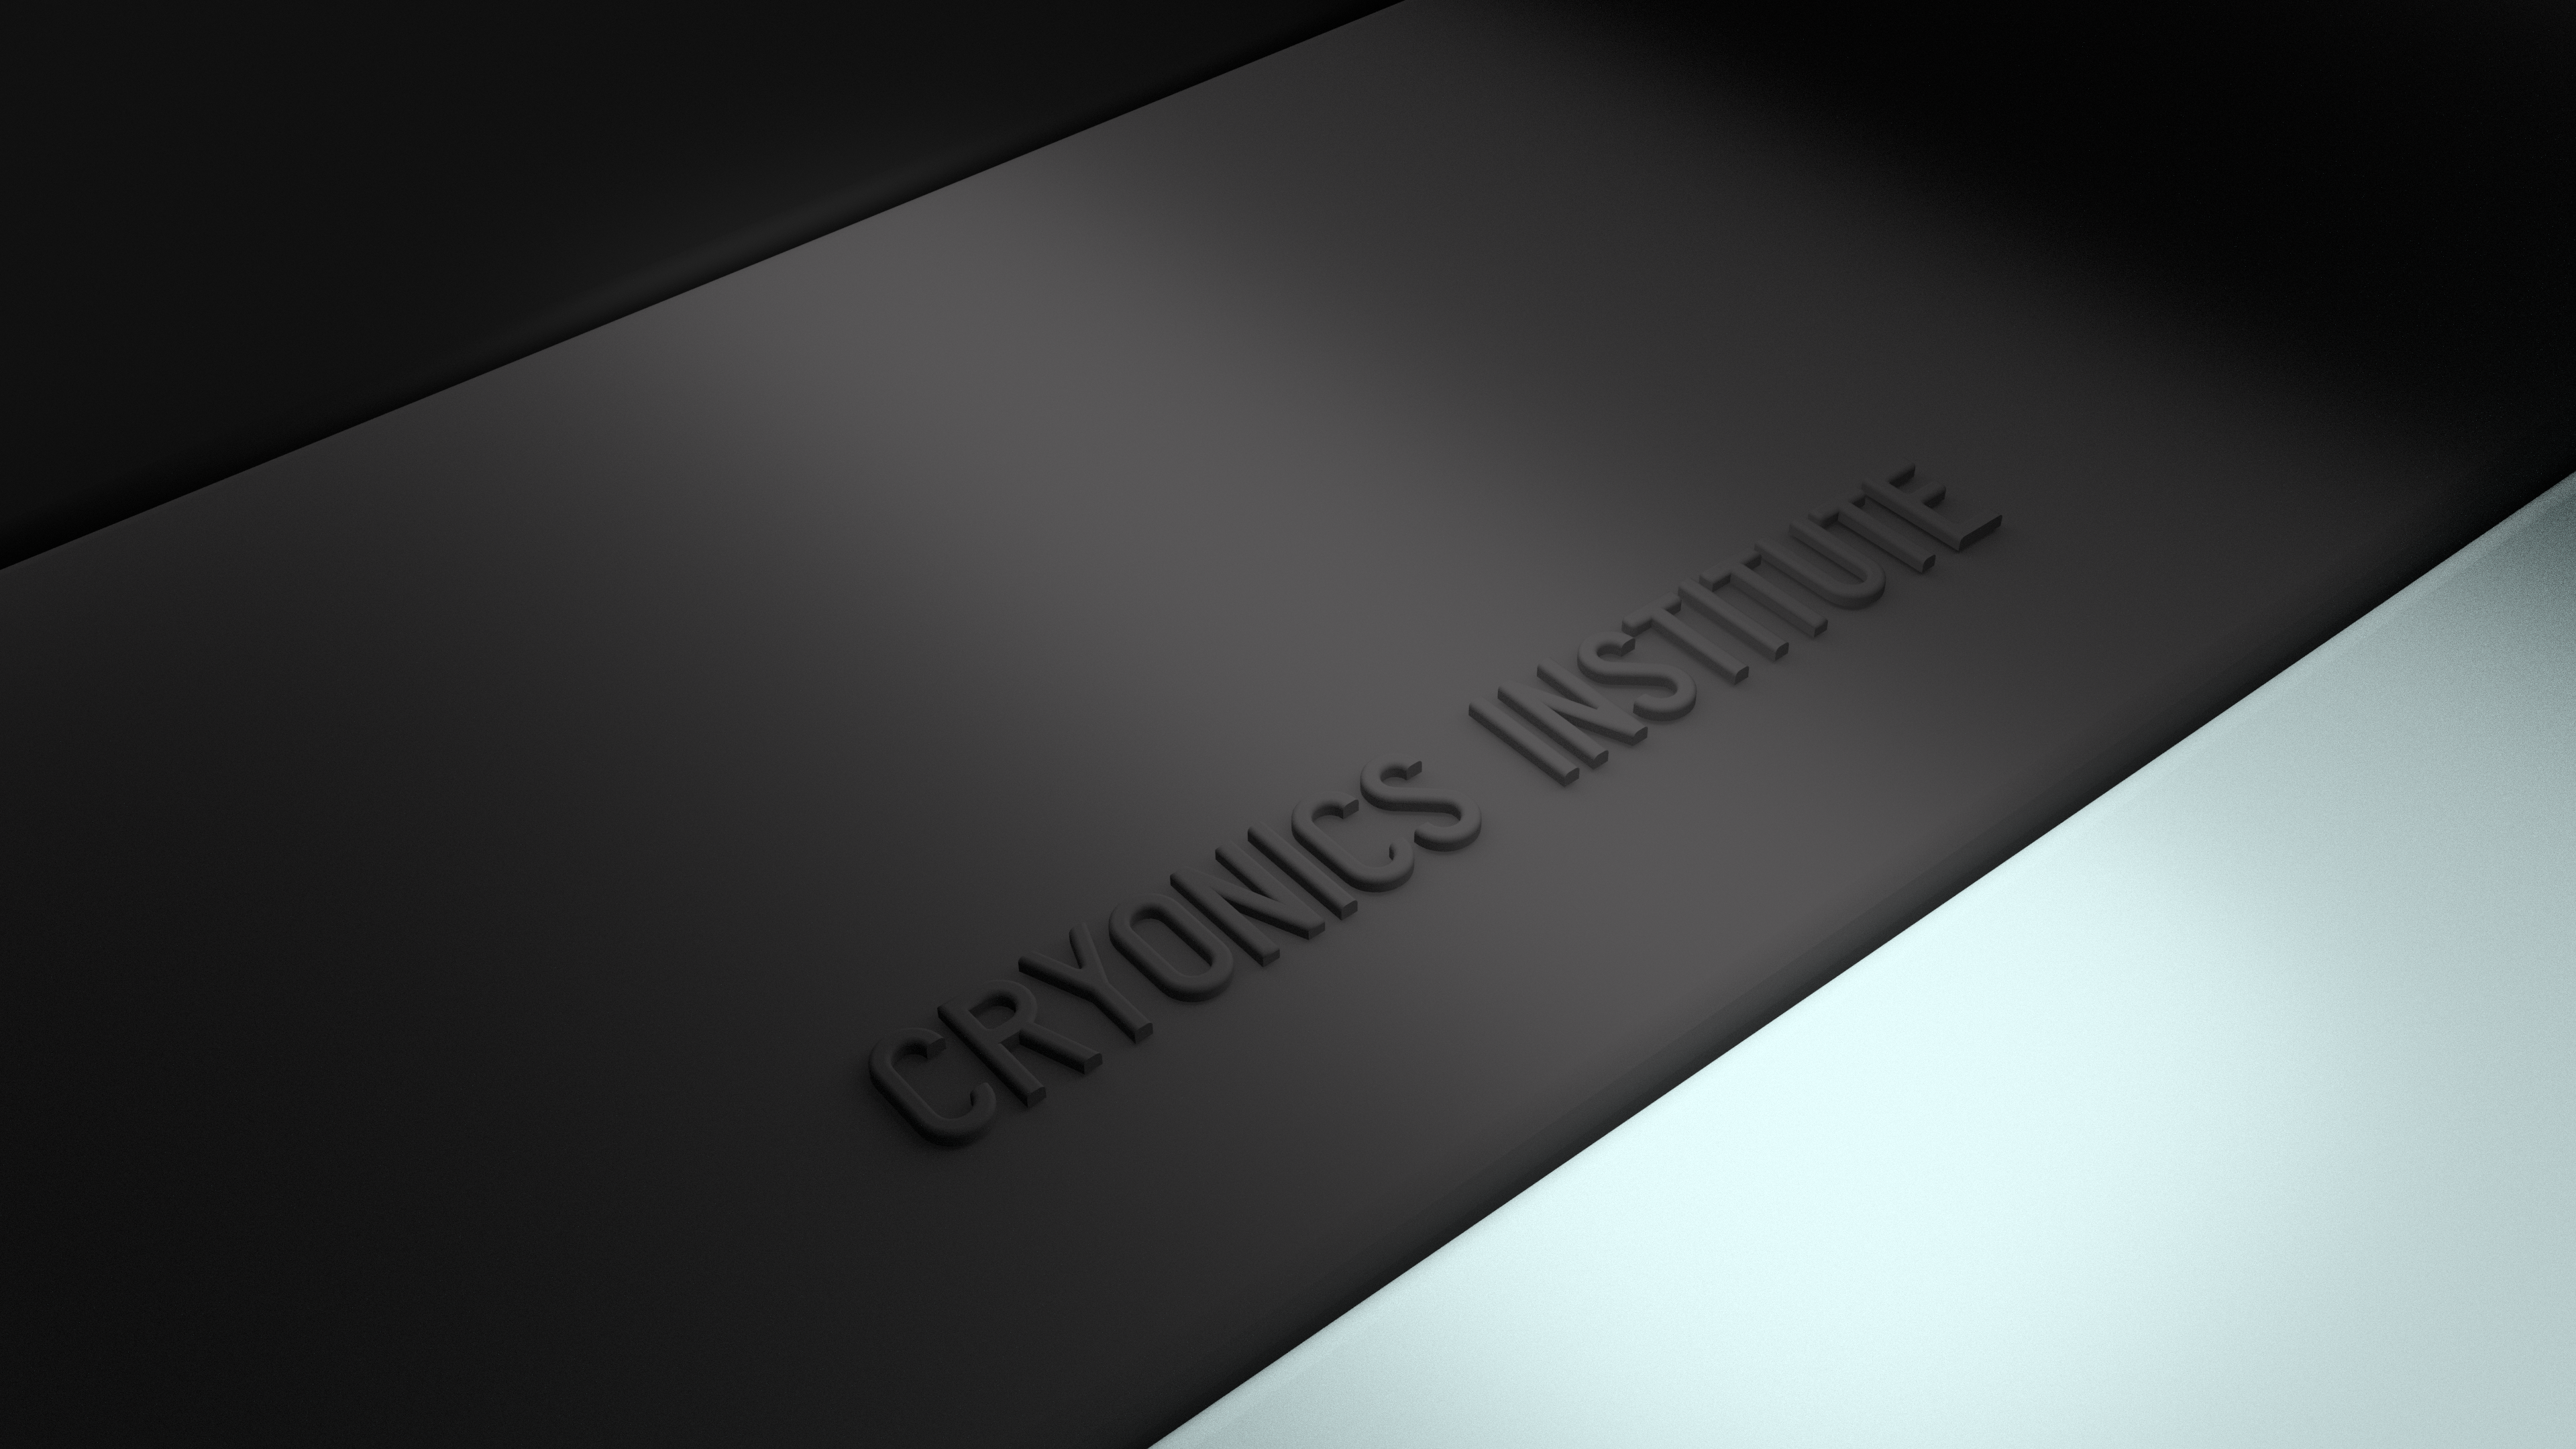 Cryonics Cryonics Institute Digital Art Black 3840x2160